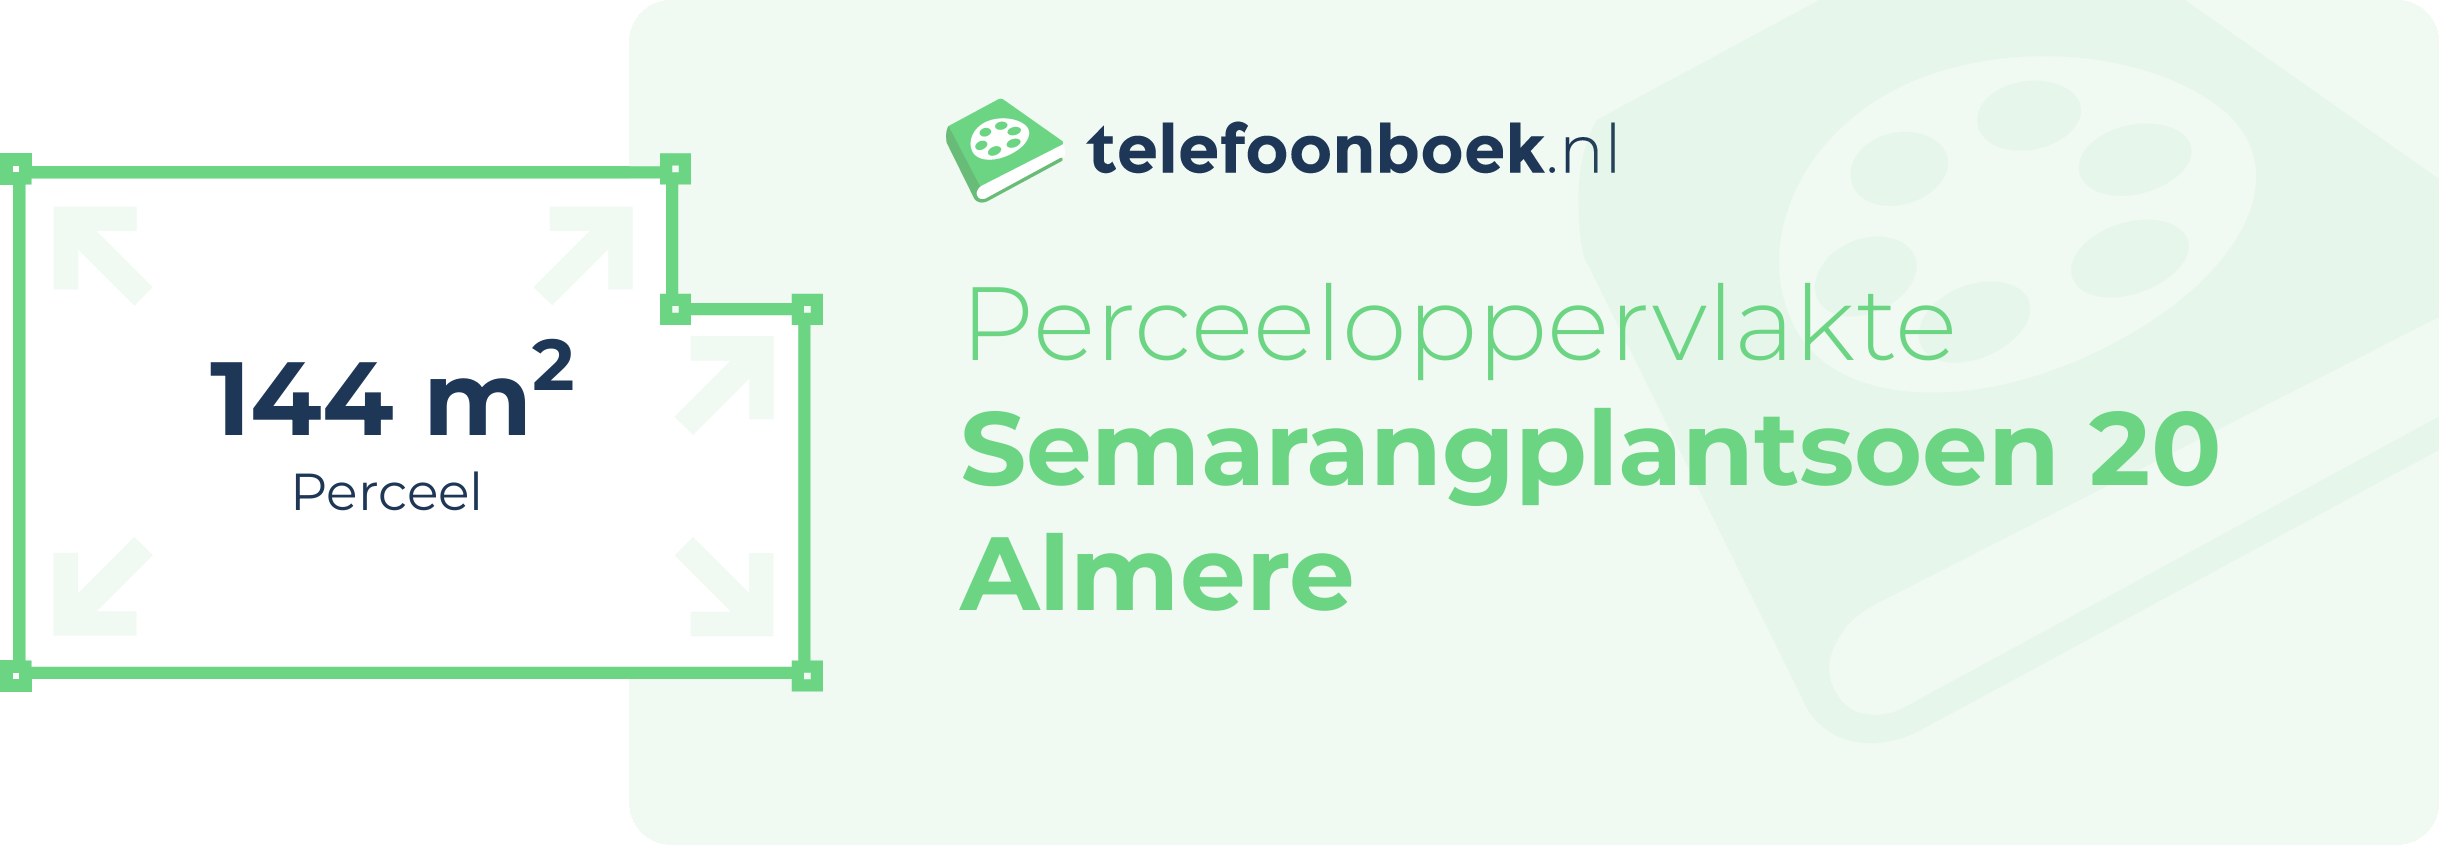 Perceeloppervlakte Semarangplantsoen 20 Almere